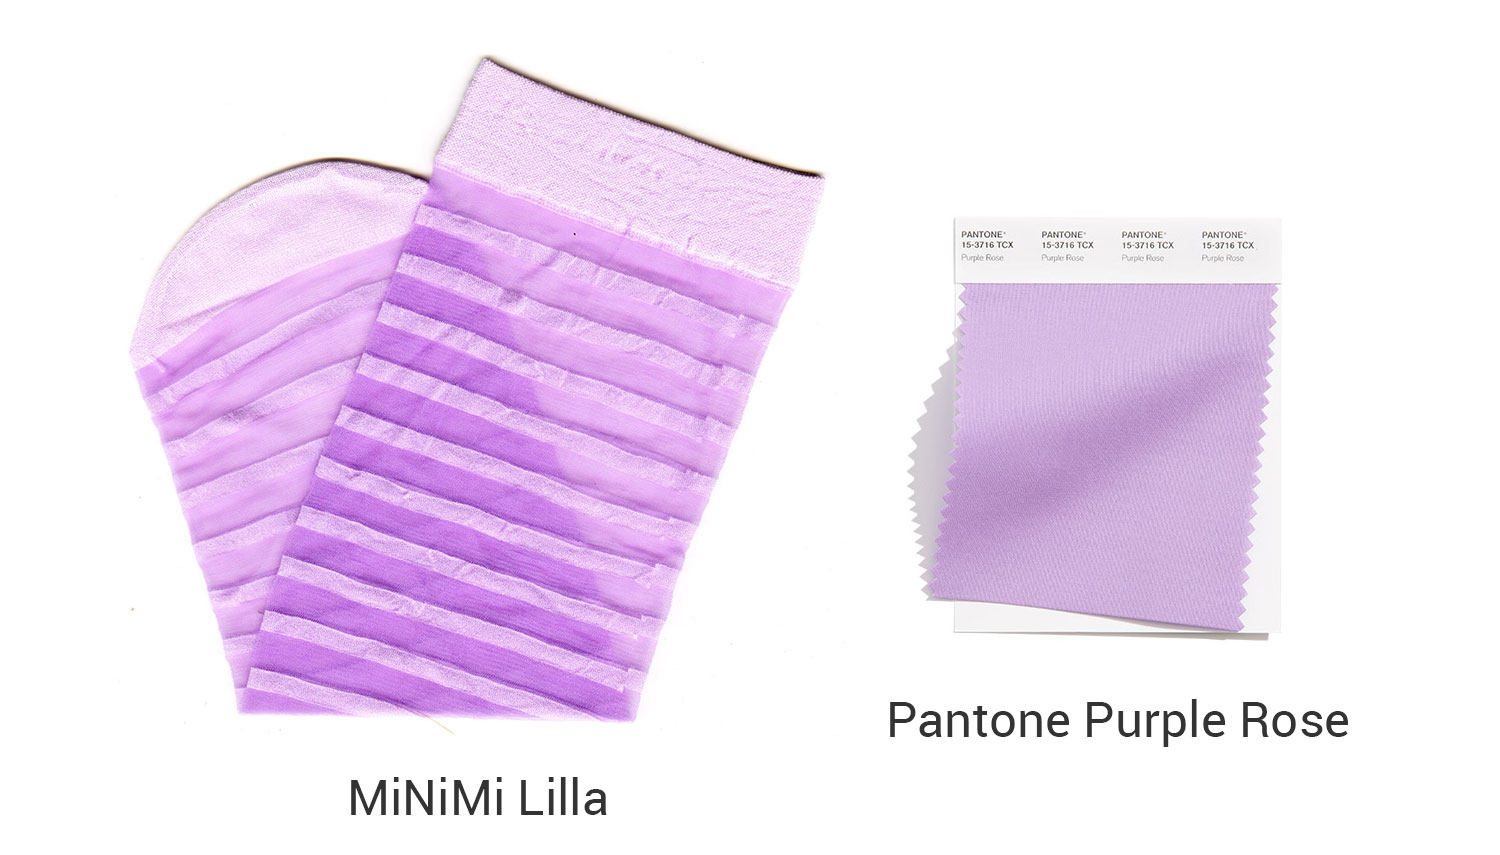 PANTONE Purple Rose VS MiNiMi Lilla